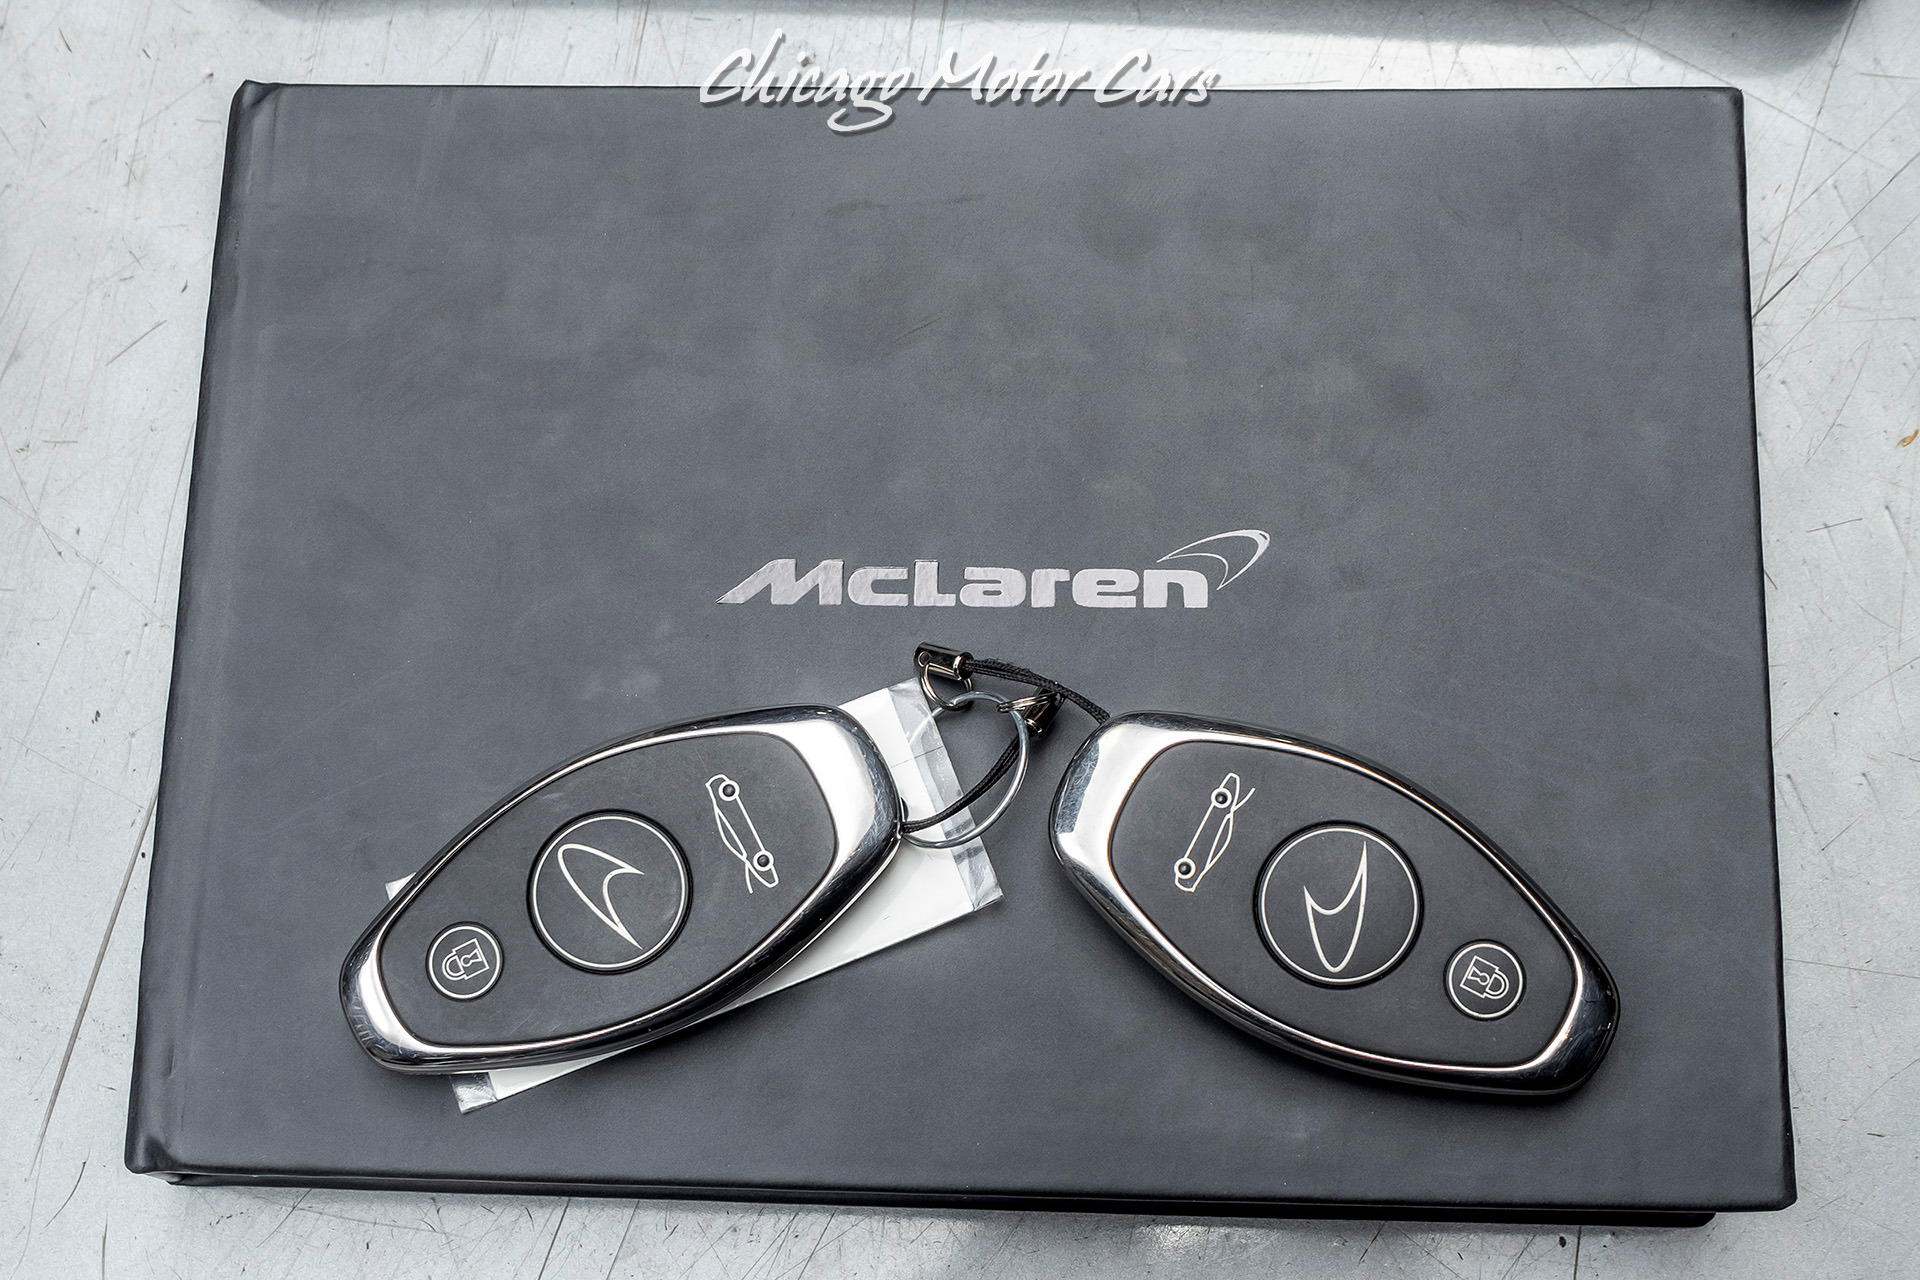 Used-2019-McLaren-720S-Performance-MSRP-366690-LOADED-wCARBON-FIBER-ANRKY-WHEELS-FULL-PPF